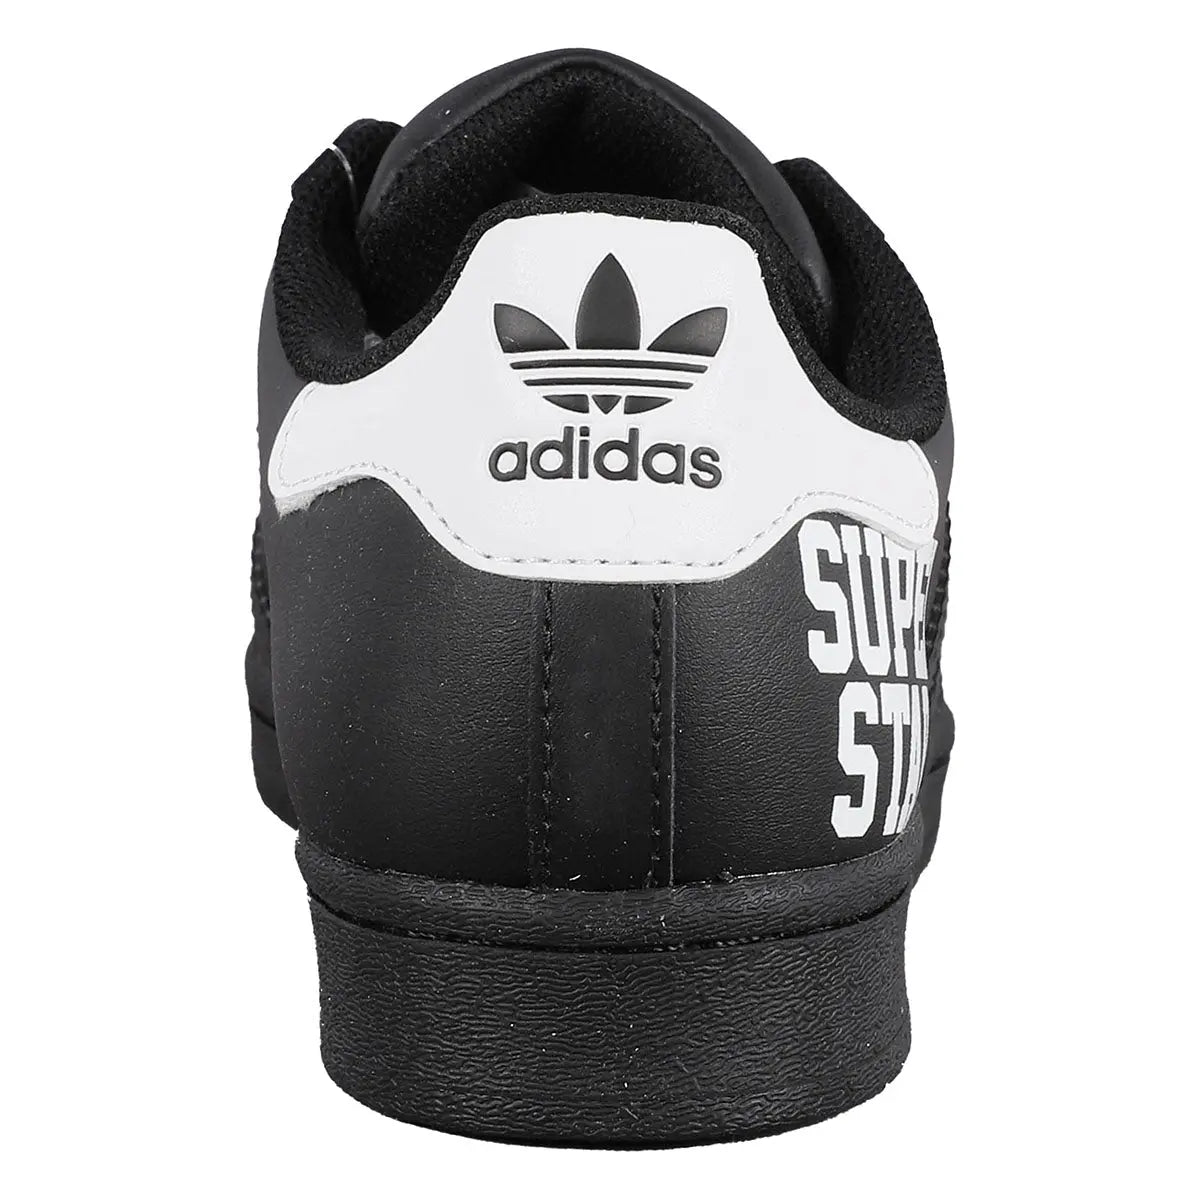  adidas Originals mens Superstar Sneaker, Core Black/White/Core  Black, 9.5 US